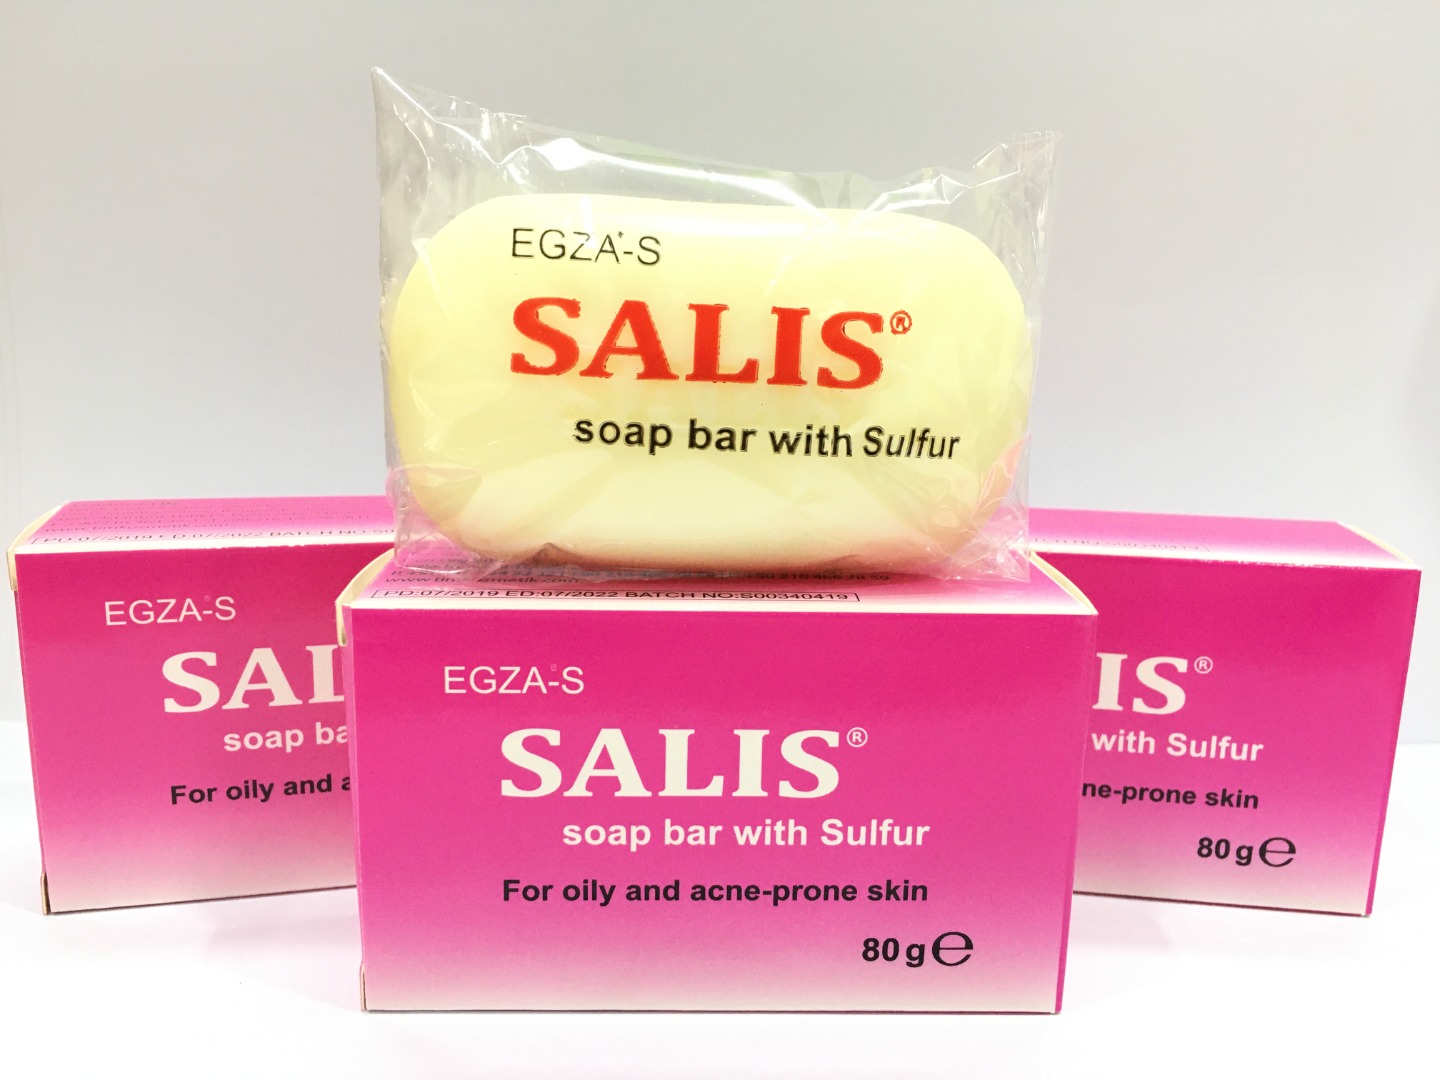 EGZA-S SALIS SOAP BAR WITH SULFUR